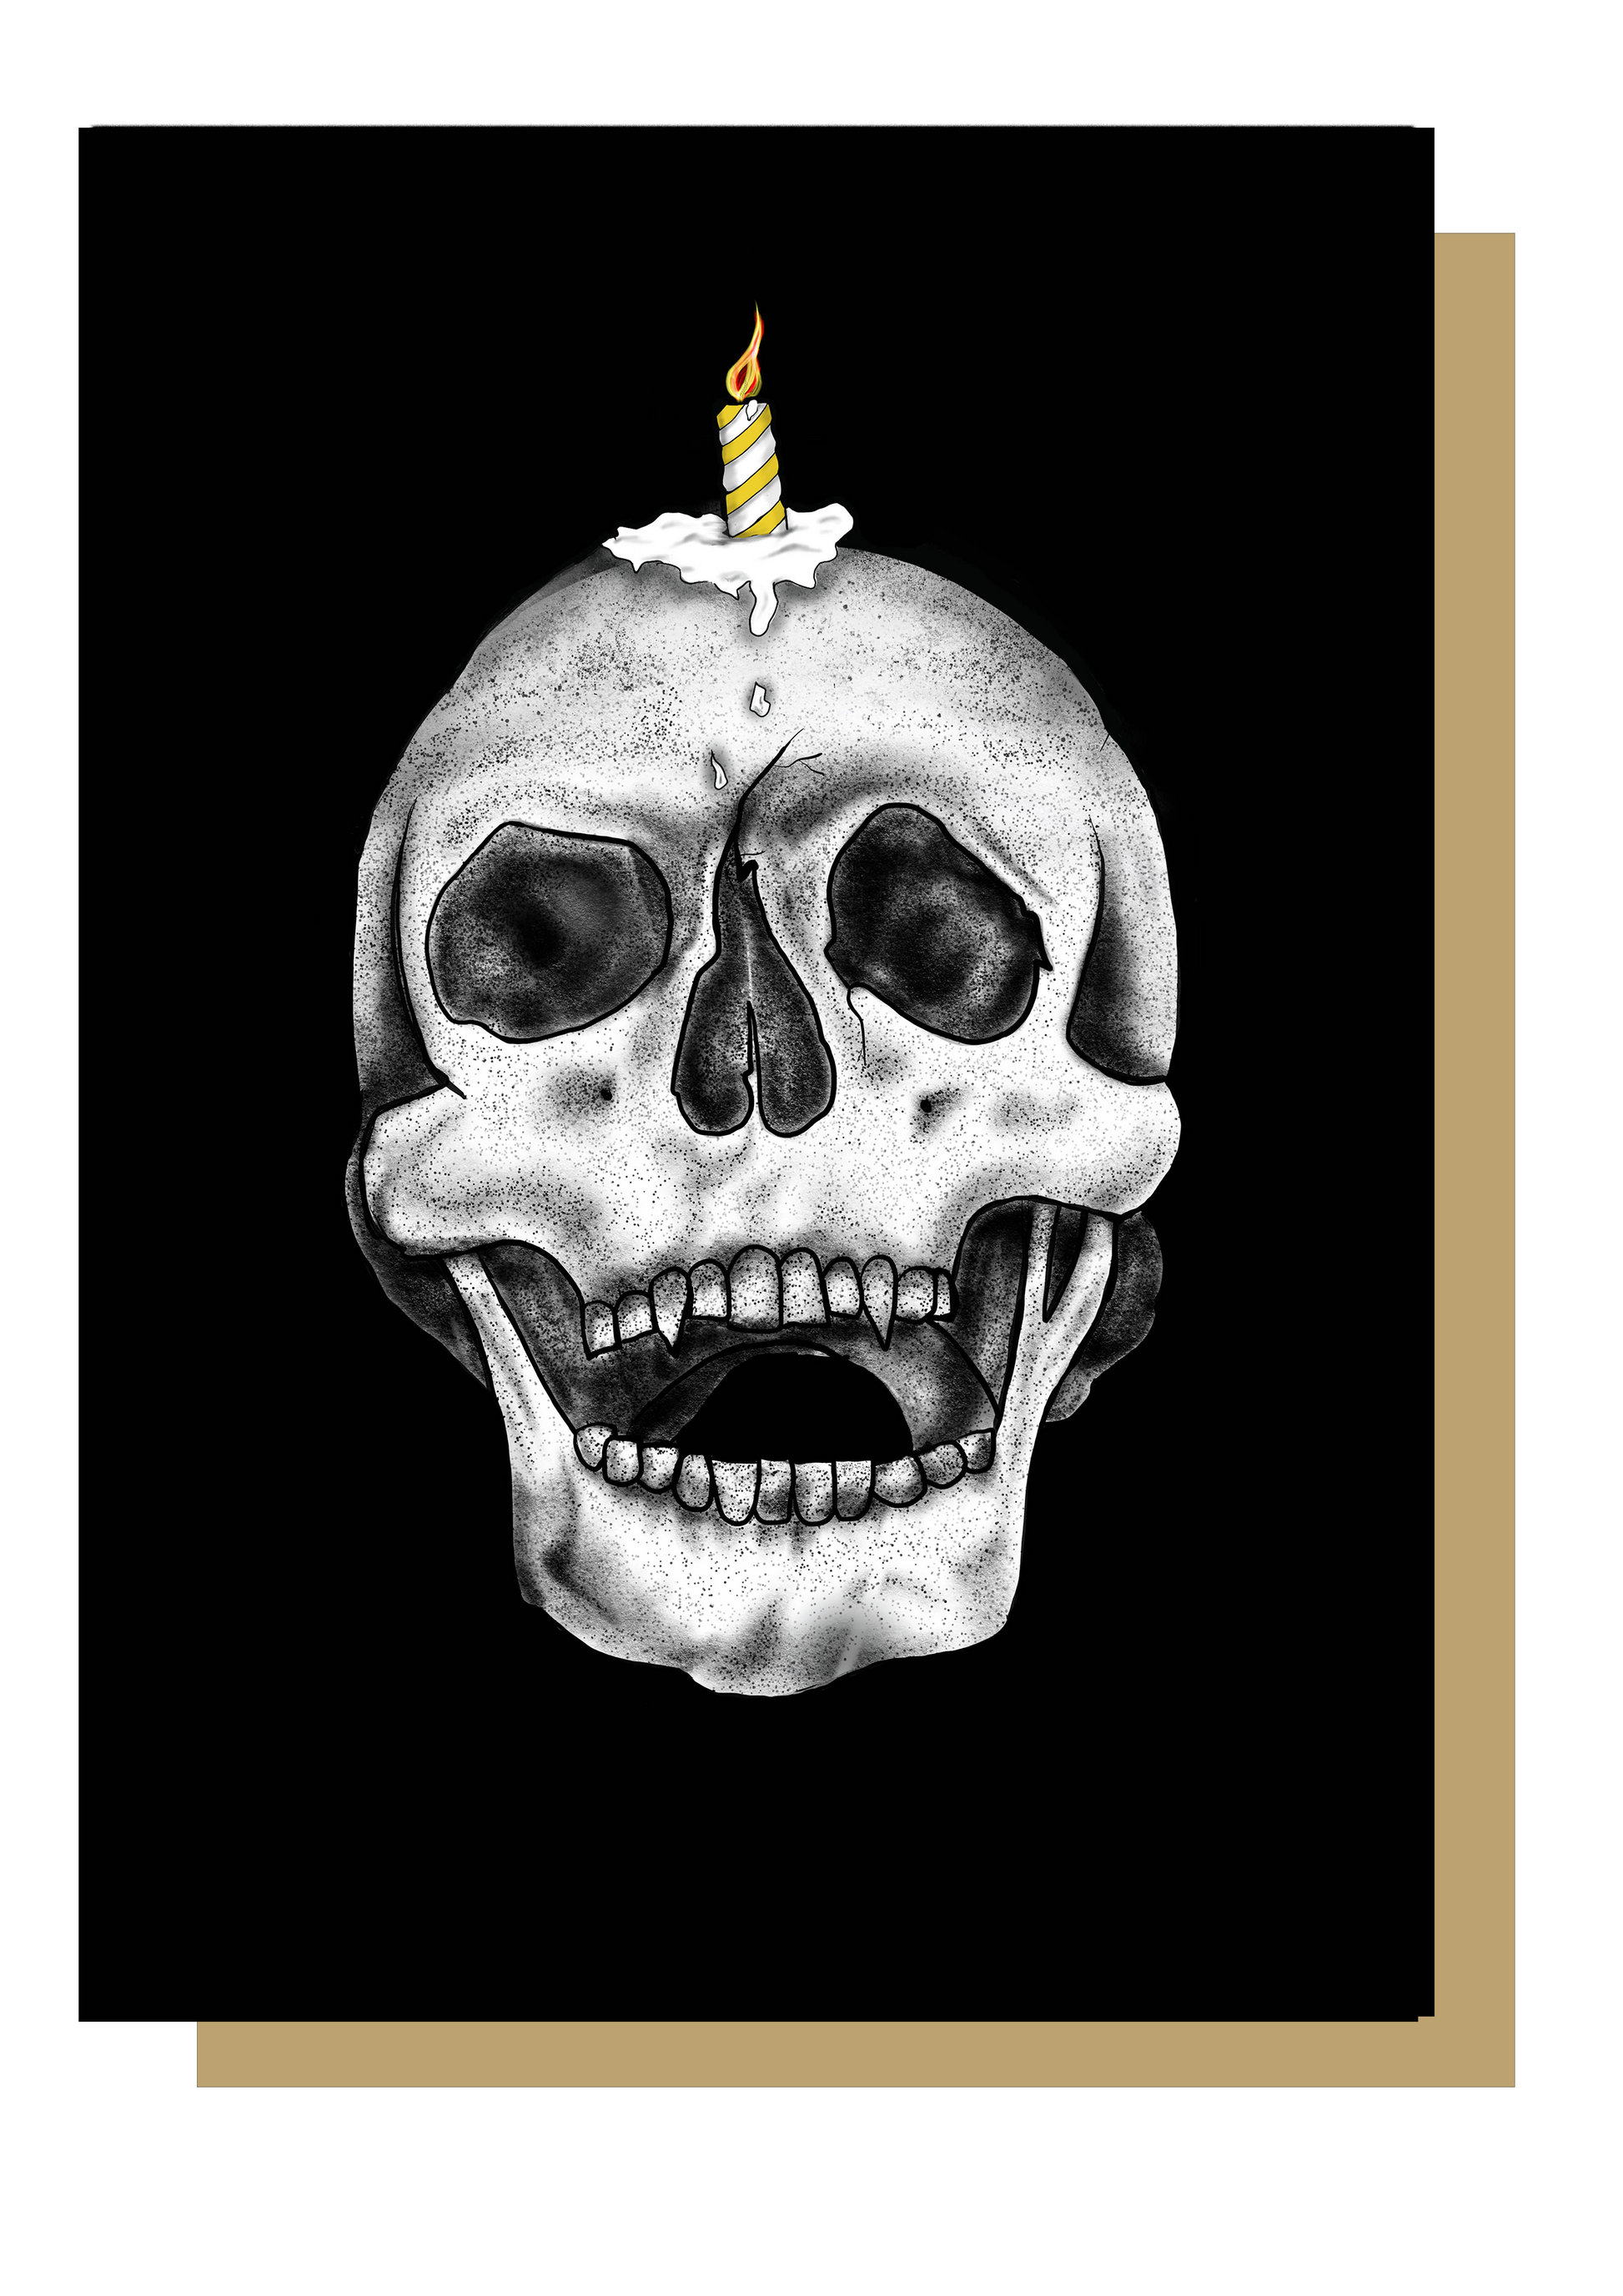 Wayward gothic birthday car - Skull with candle on head on black background